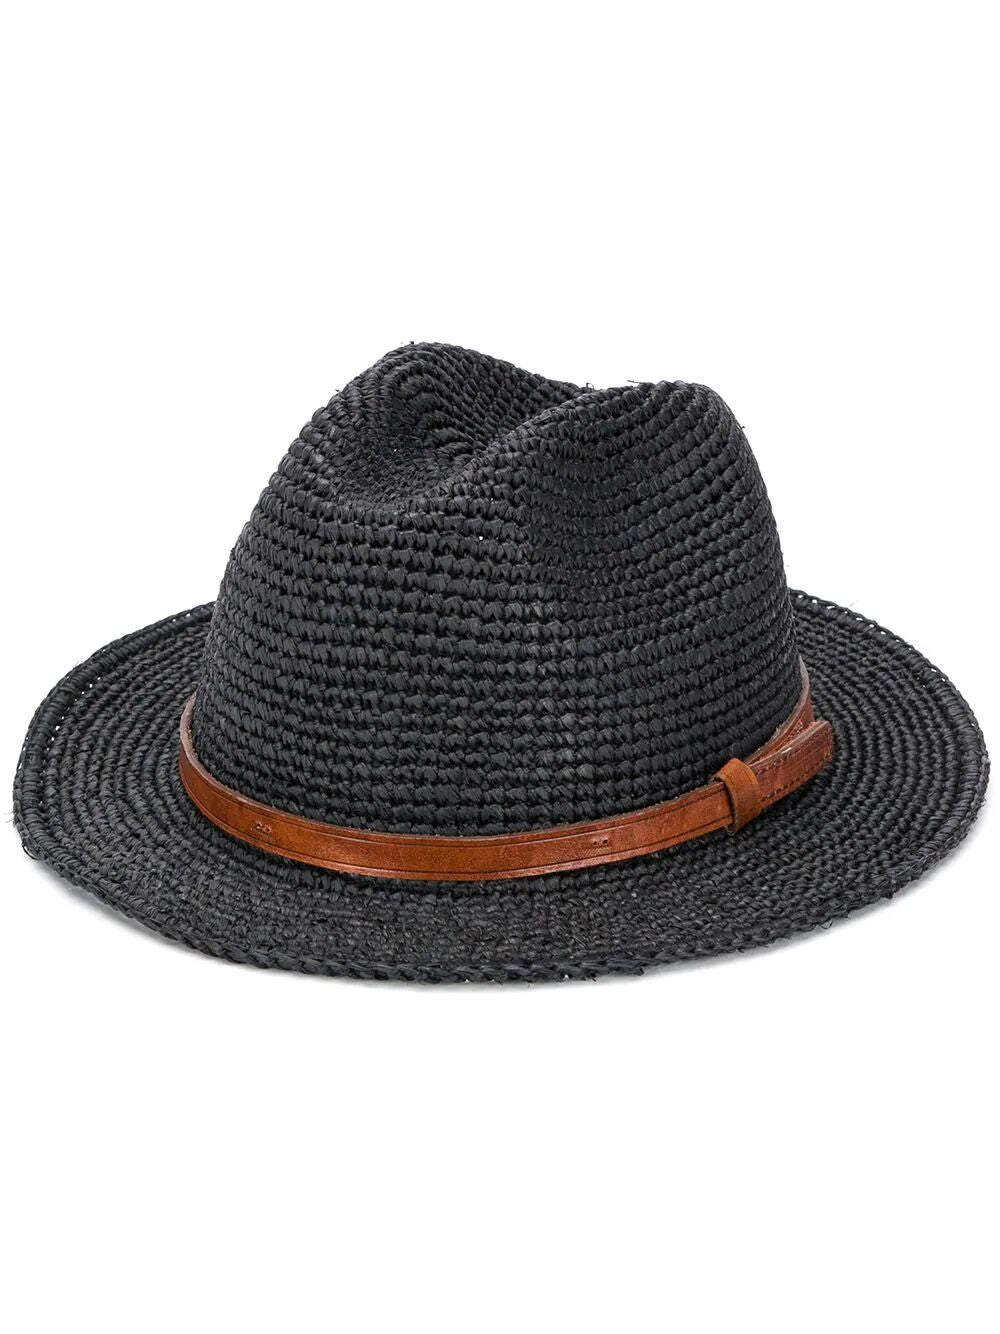 Lubeman Hat